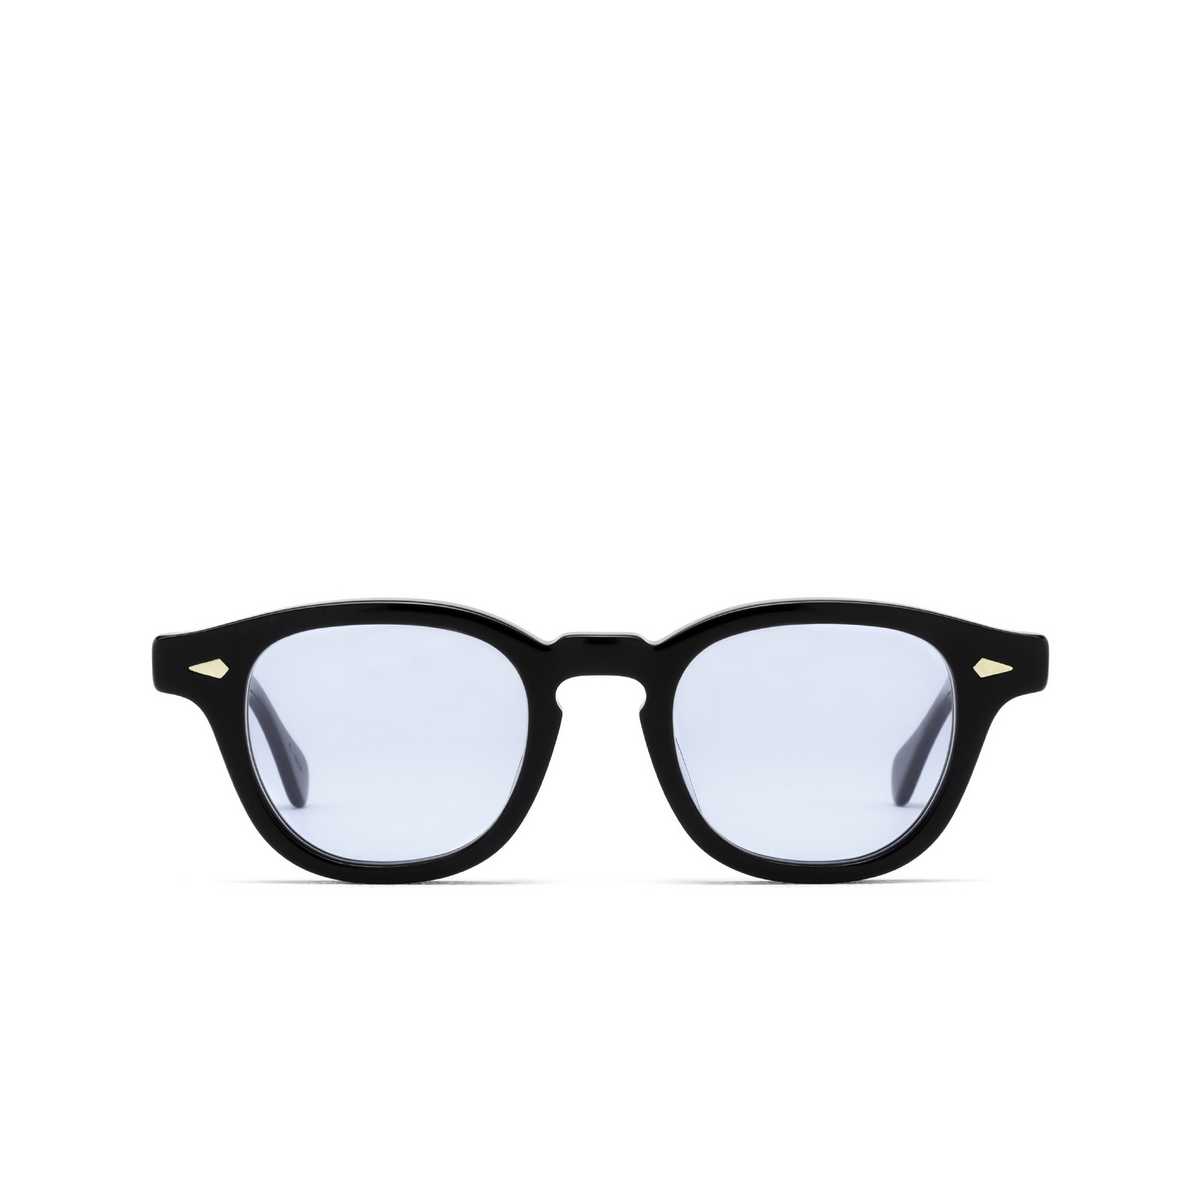 Julius Tart Optical AR Sunglasses BLACK - front view